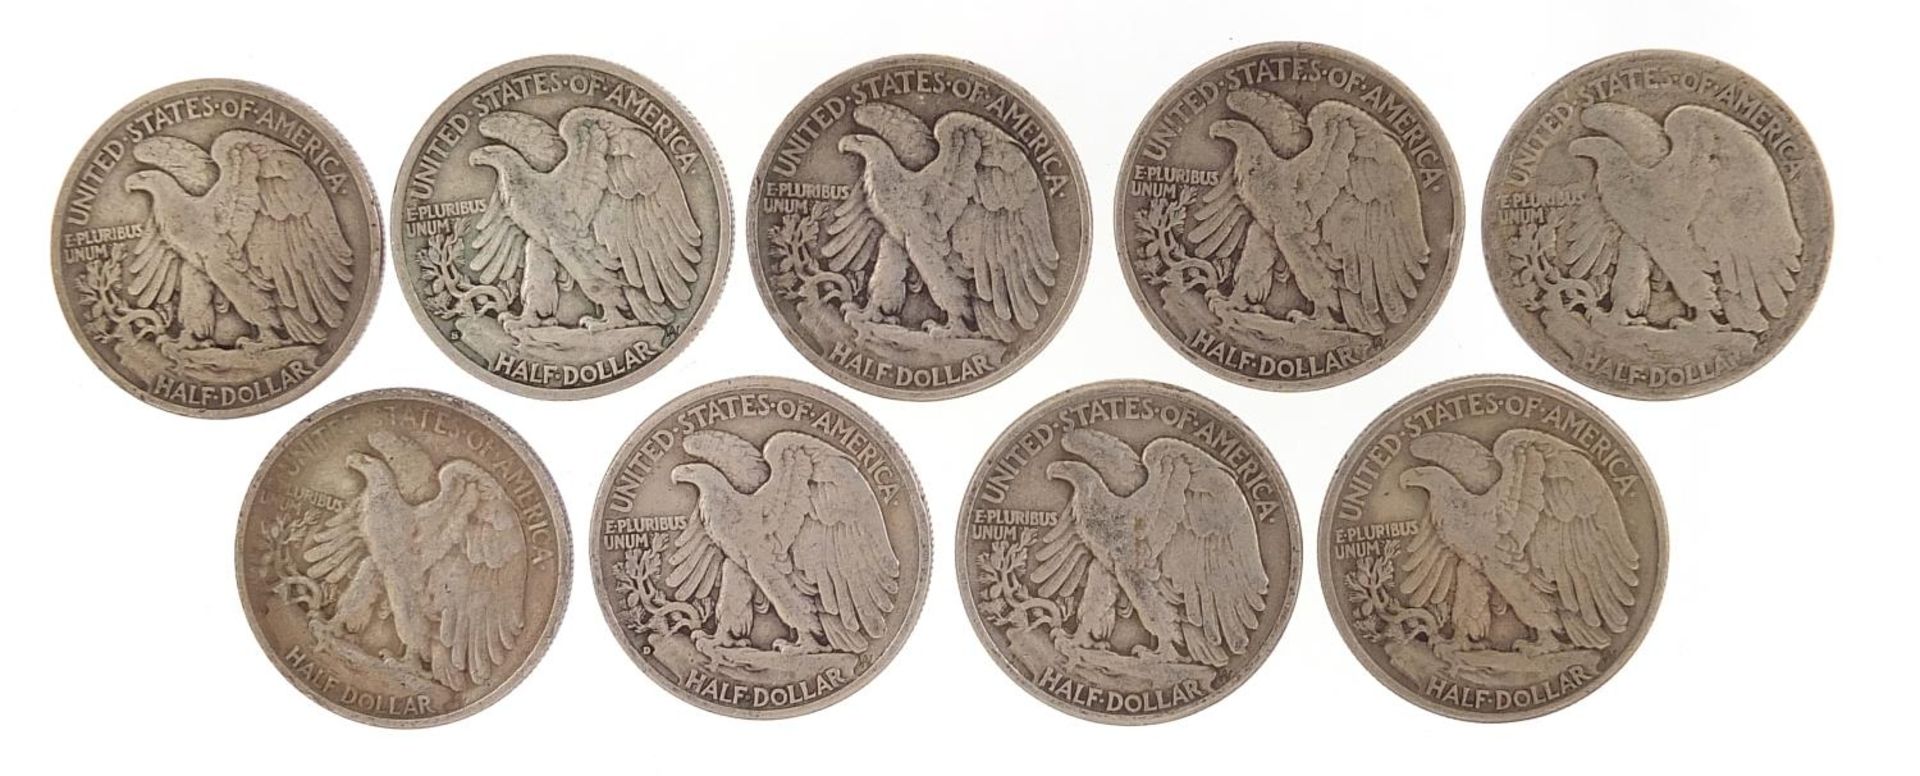 Nine 1940's United States of America Eagle half dollars, 111g - Image 4 of 6